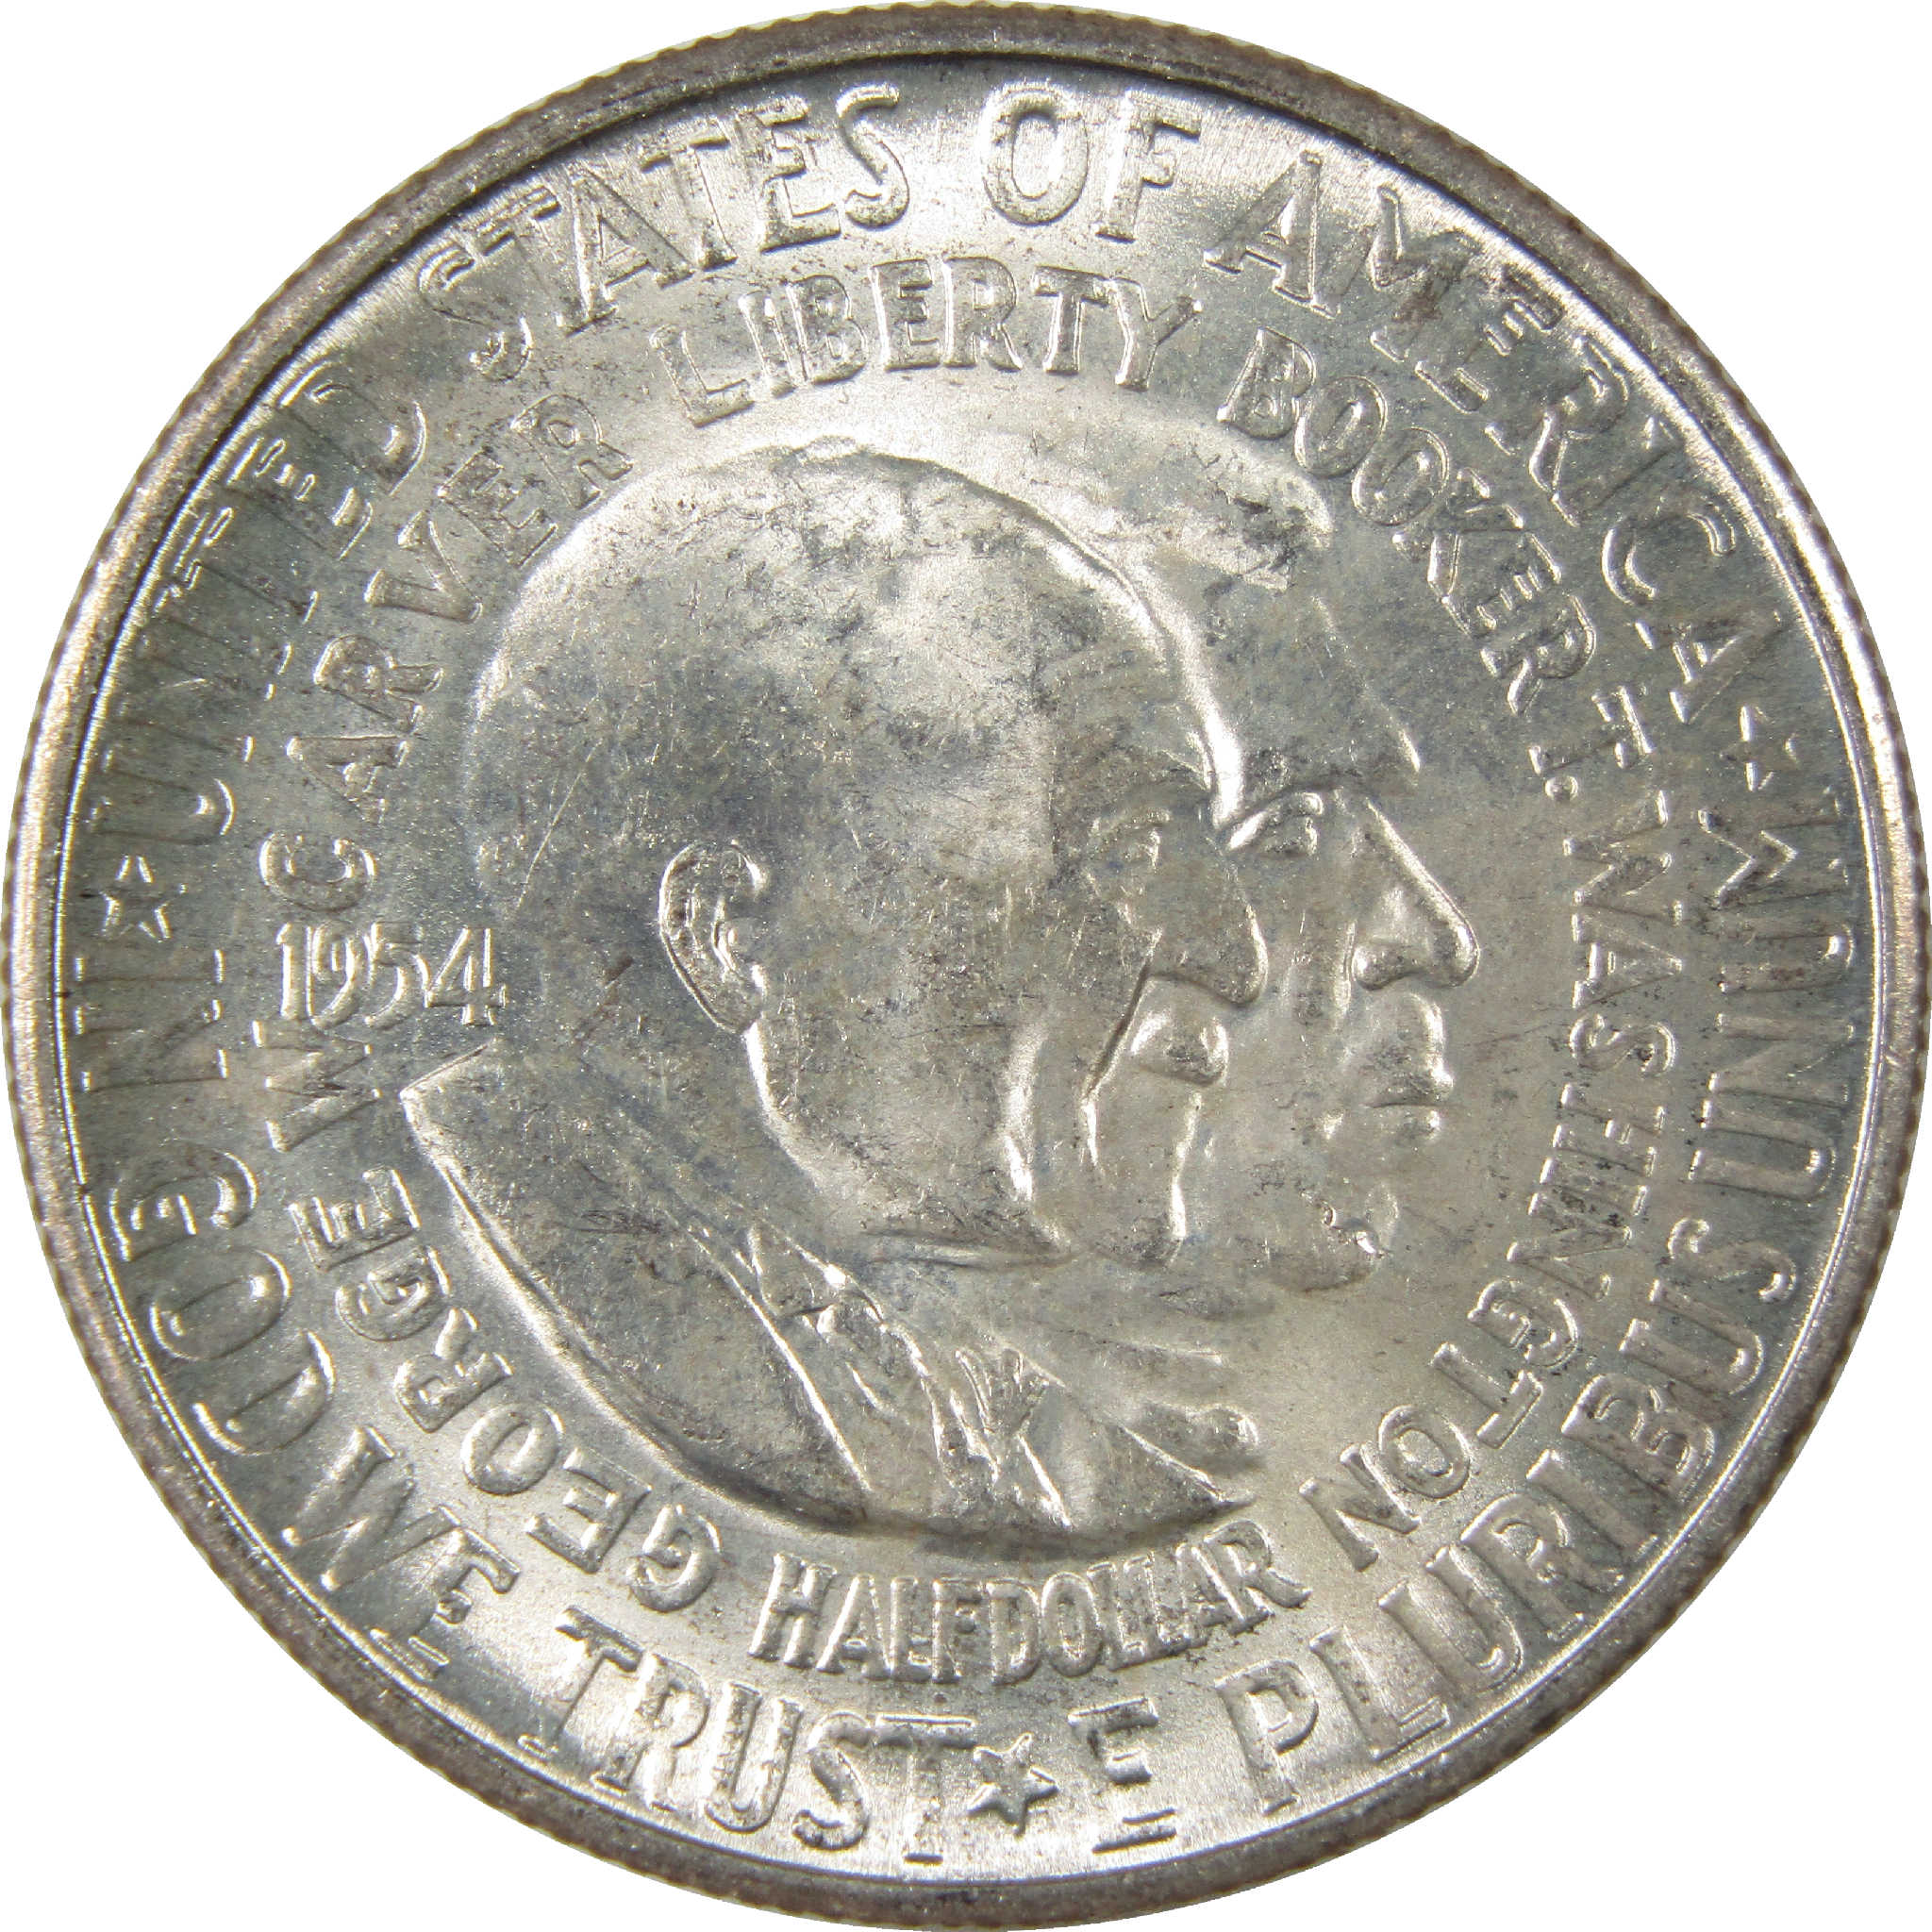 Washington-Carver Half Dollar 1954 S Uncirculated Silver 50c Coin